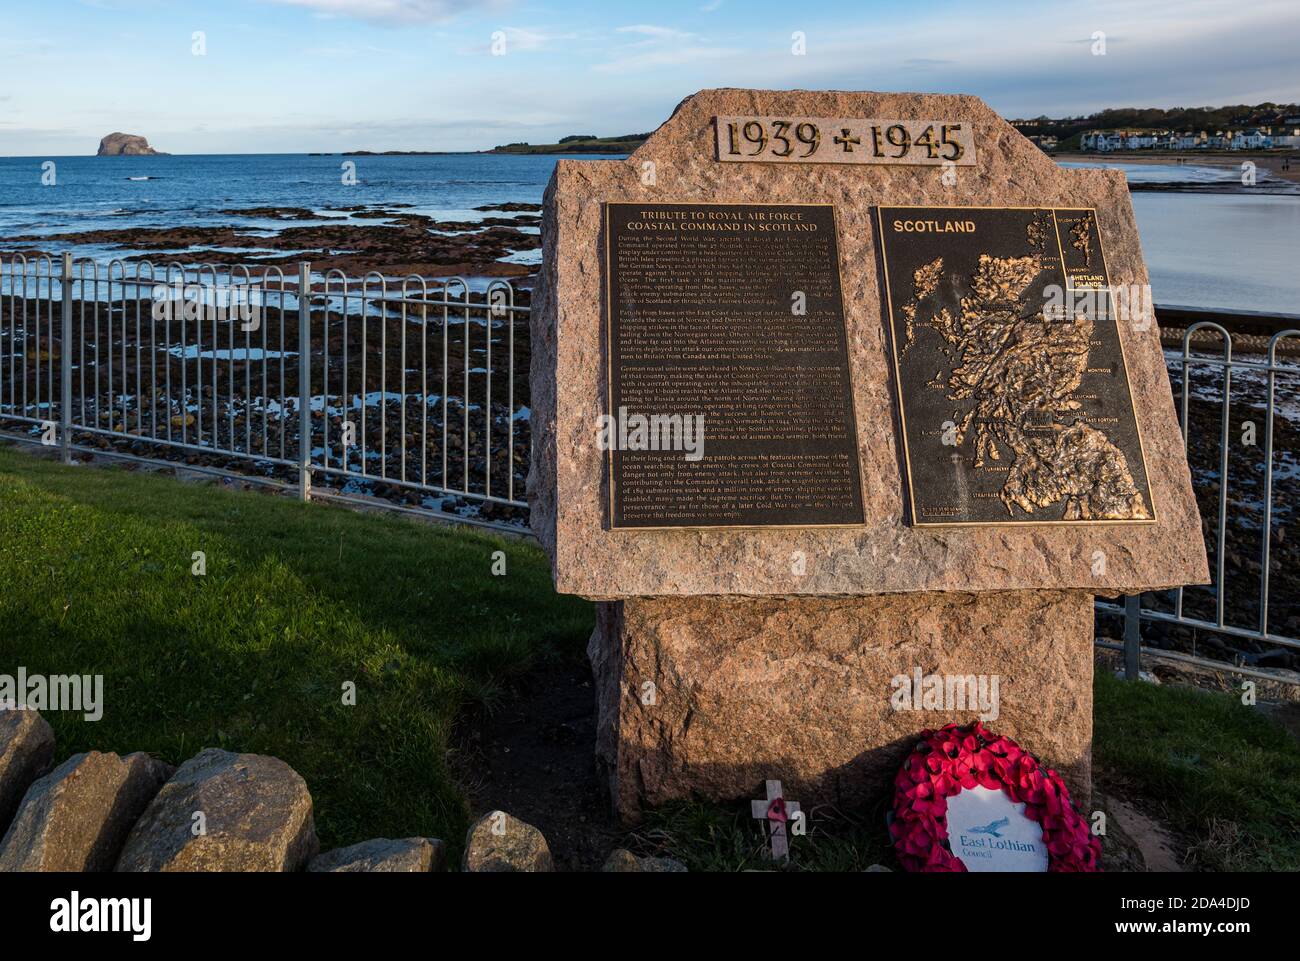 Memorial to RAF coastal defence command during world war II with poppy wreath, North Berwick, East Lothian, Scotland, UK Stock Photo